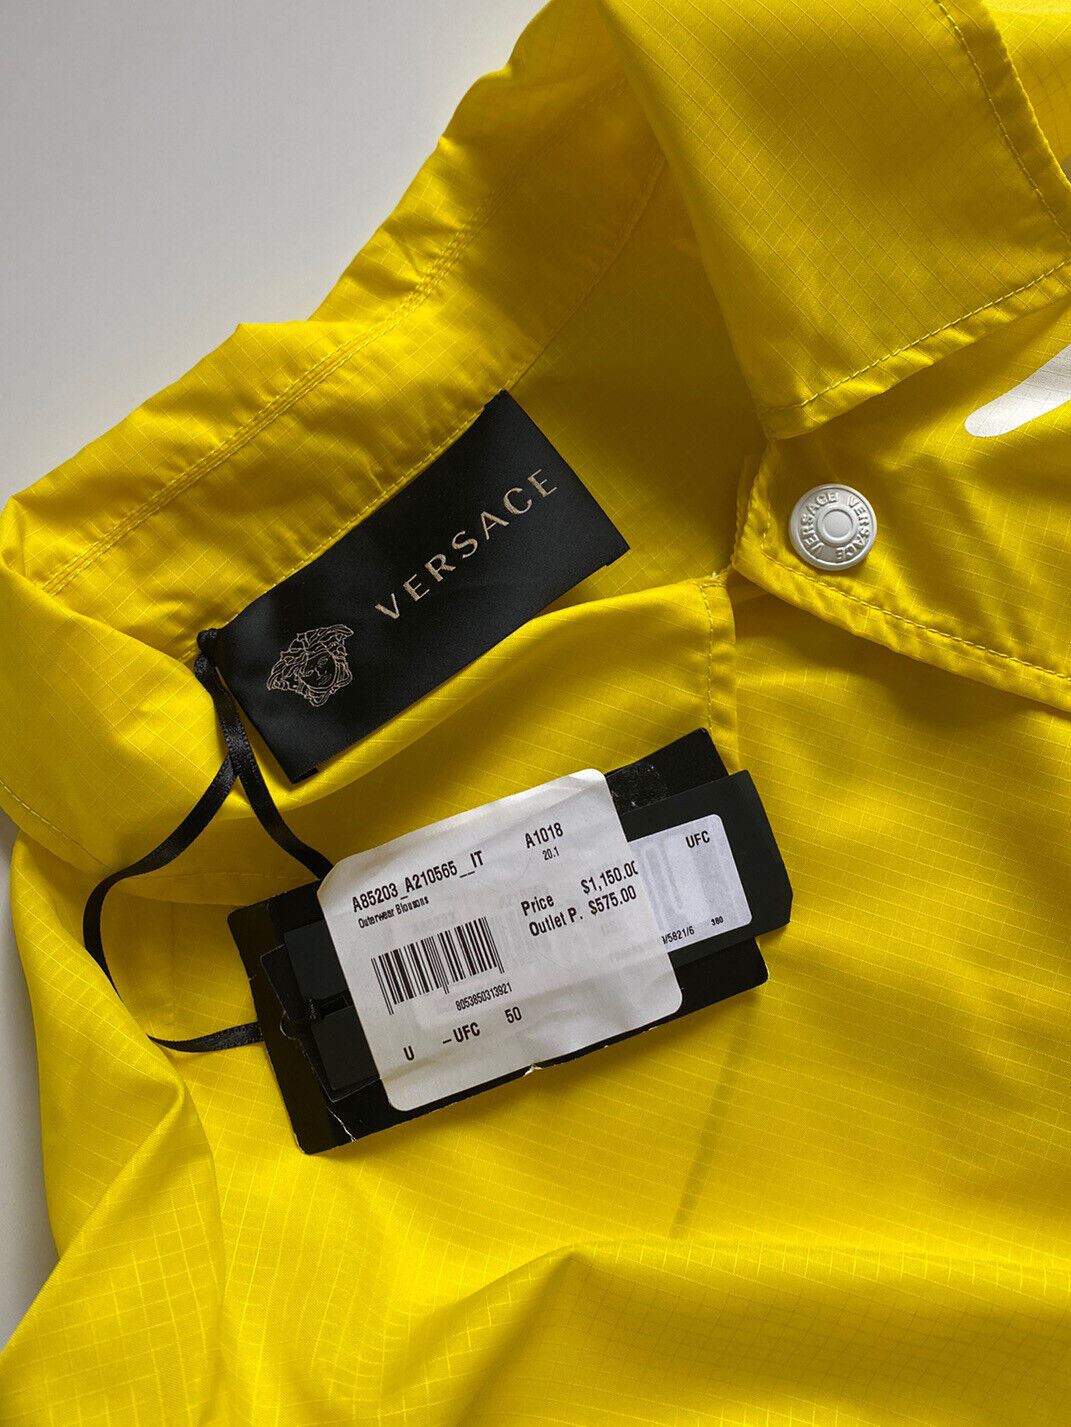 NWT $1150 Versace Men's Button Down Yellow Raincoat Jacket S (46 Euro) A85203 IT